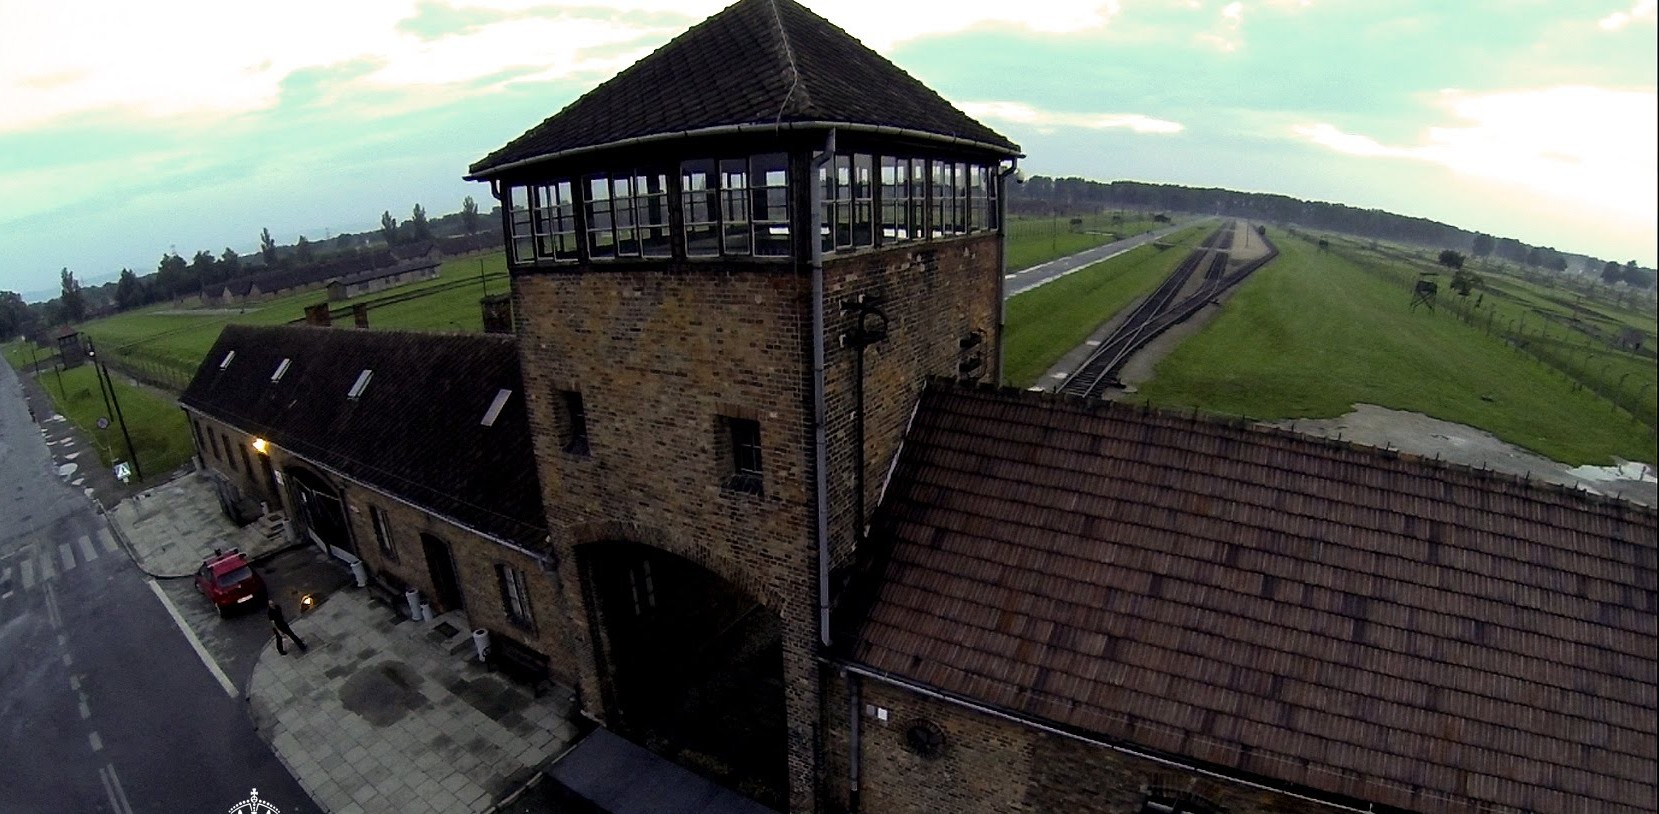 Auschwitz- Concentration camp